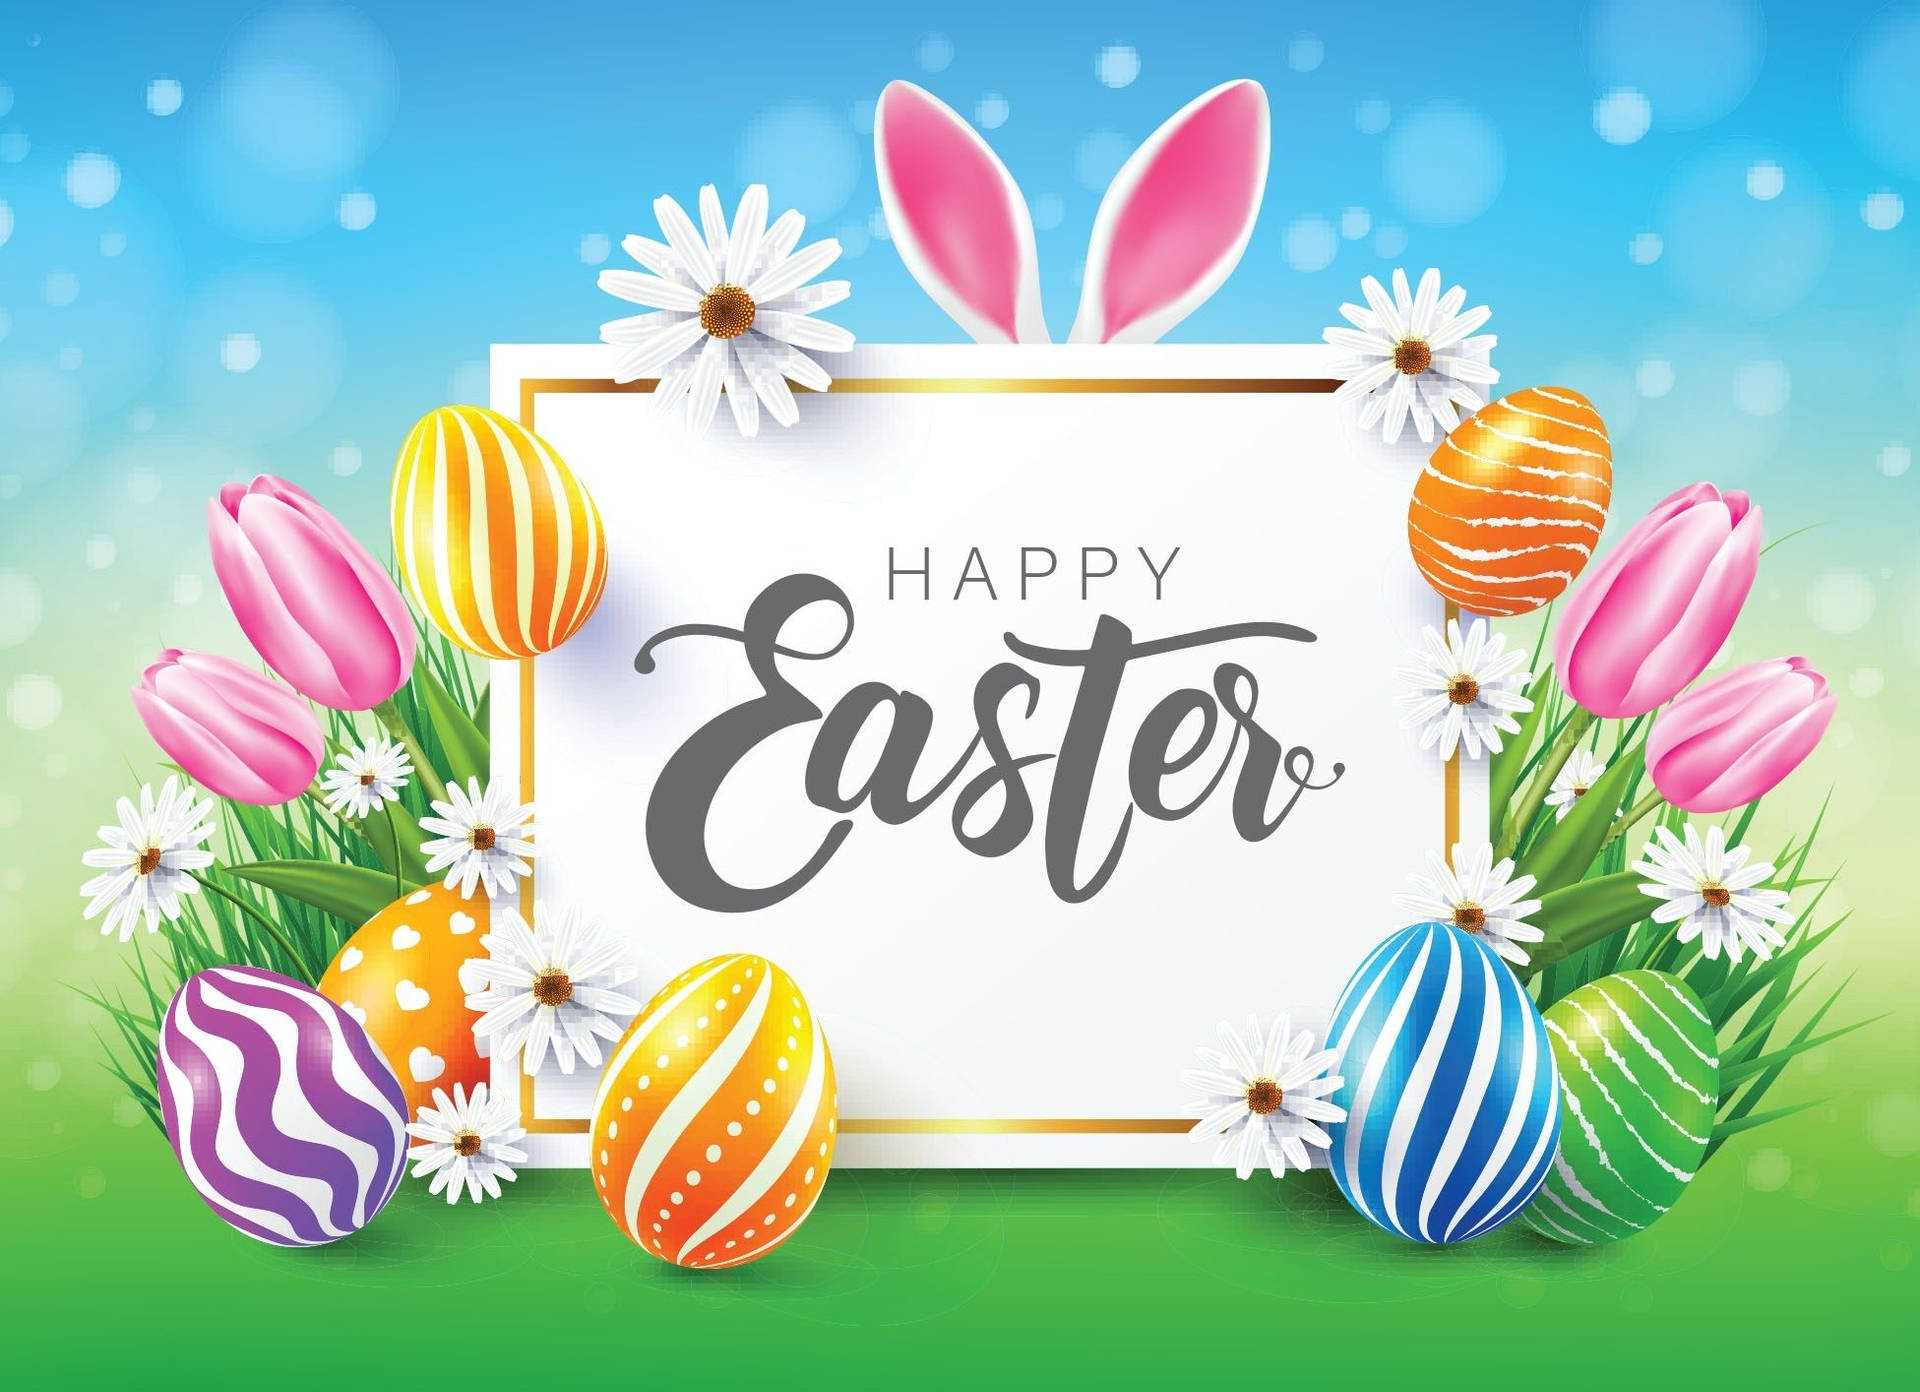 Happy Easter Desktop Card Wallpaper